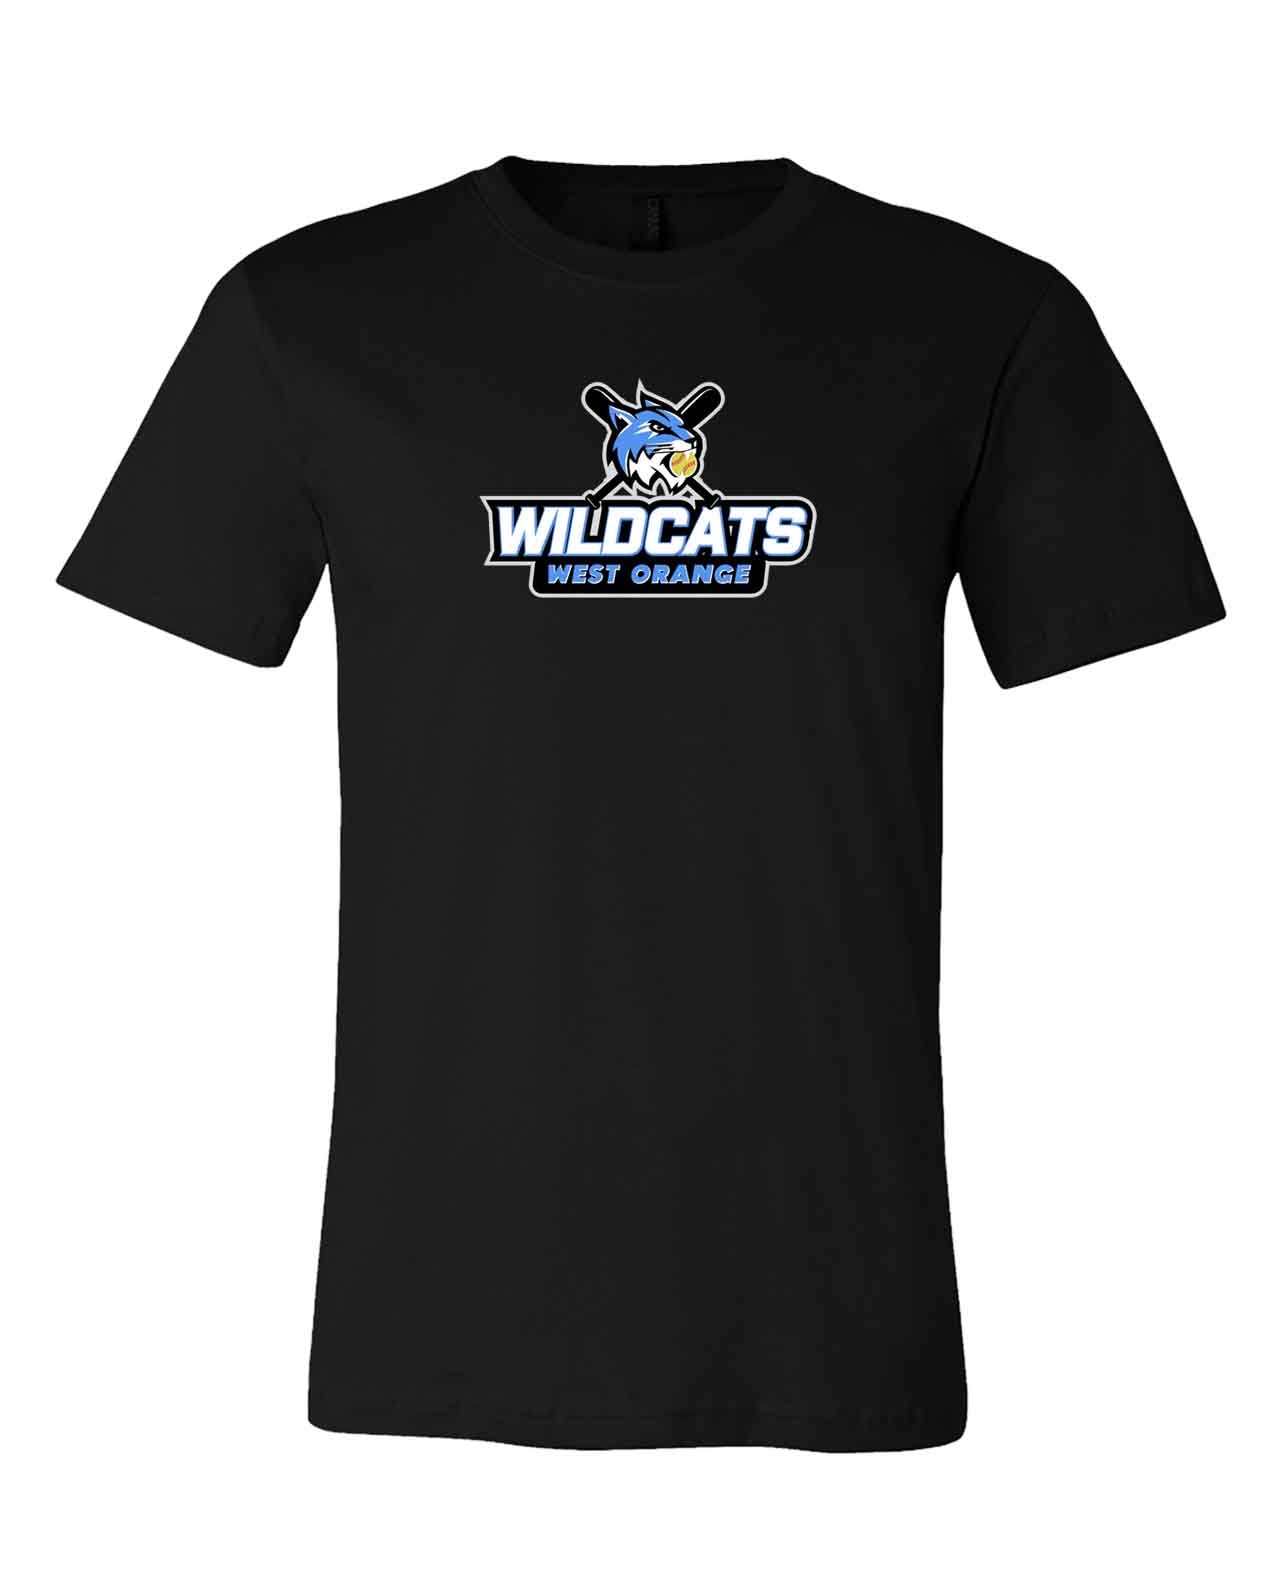 West Orange Wildcats Unisex Crew